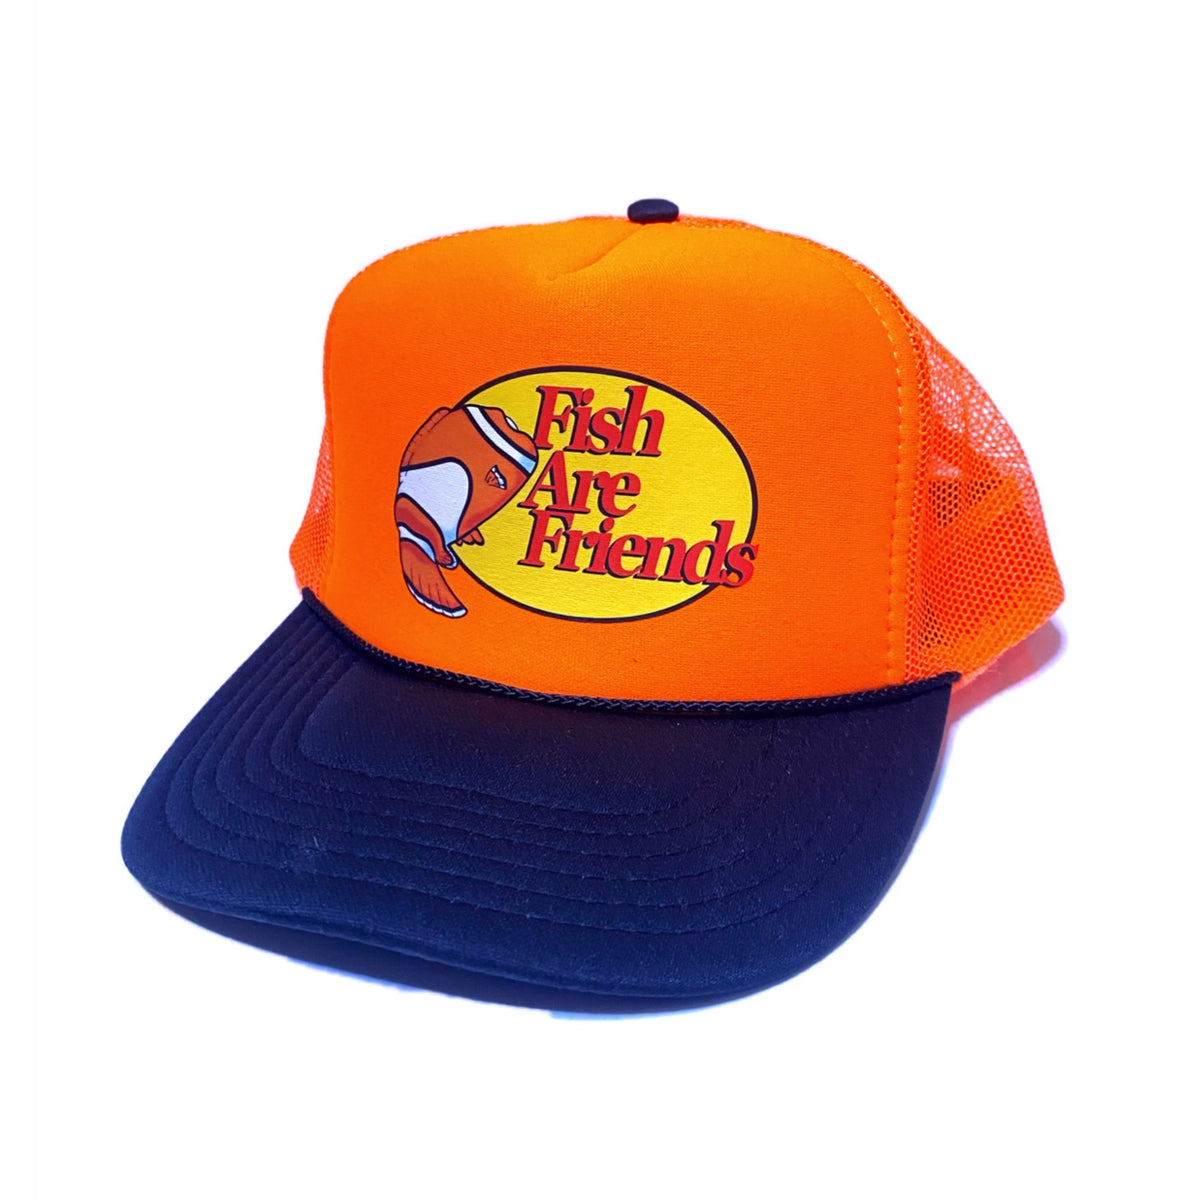 Fish Are Friends Trucker Hat - Orange